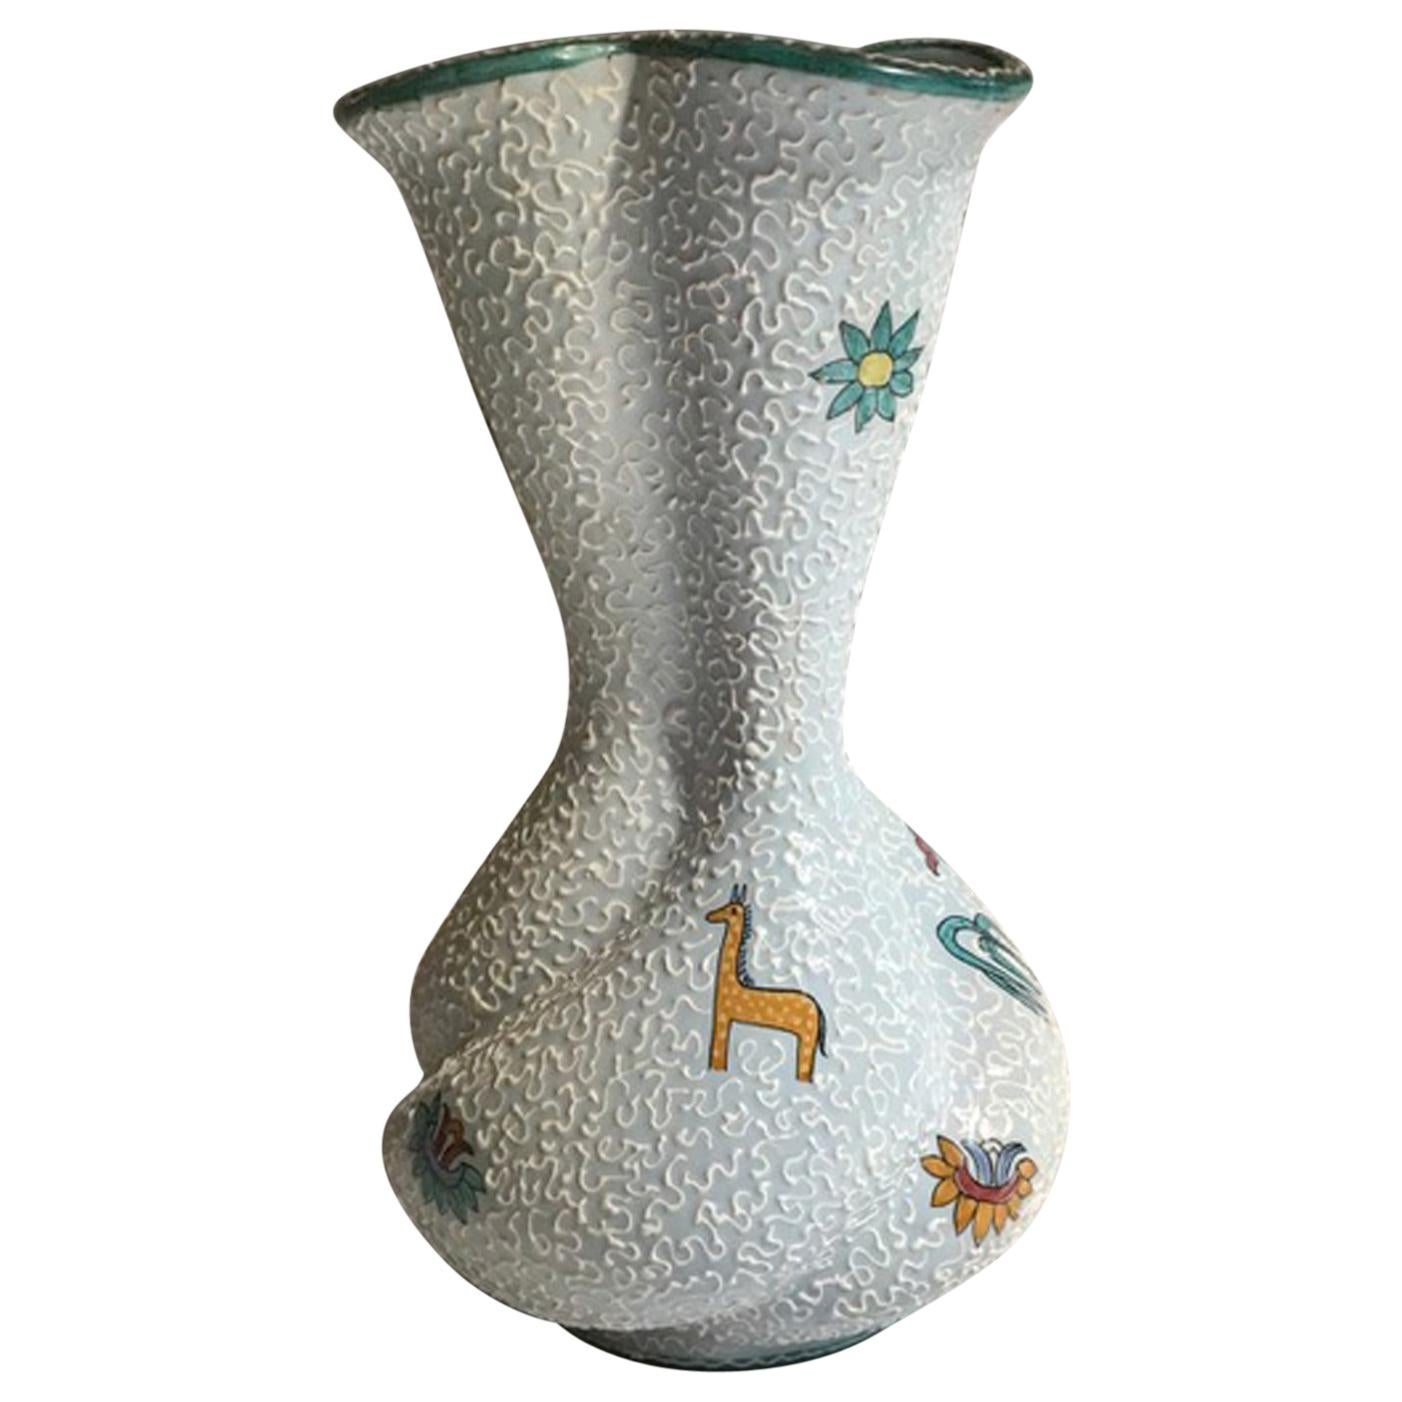 Italy 1960 White Enameled Ceramic Vase in Gio' Ponti Midcentury Style